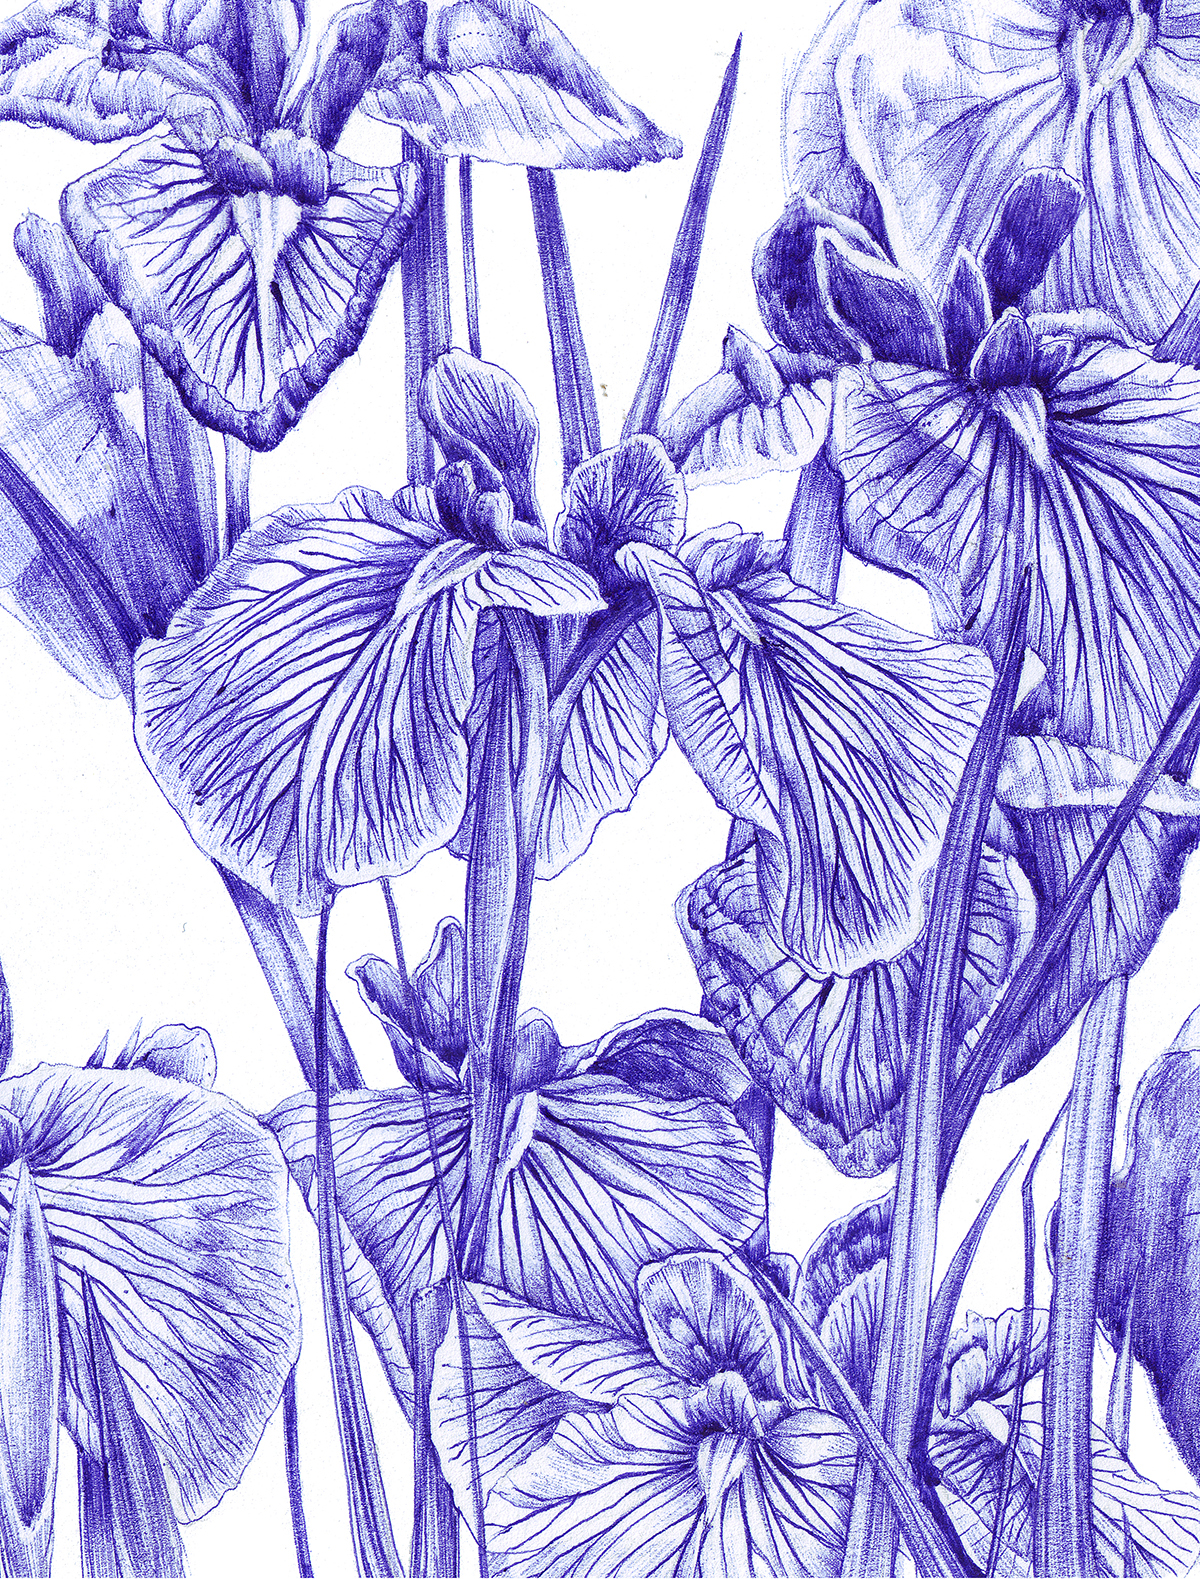 bic pen blue Nature Fisika soap lid box Flowers poppies daisies Irises ecologic package art